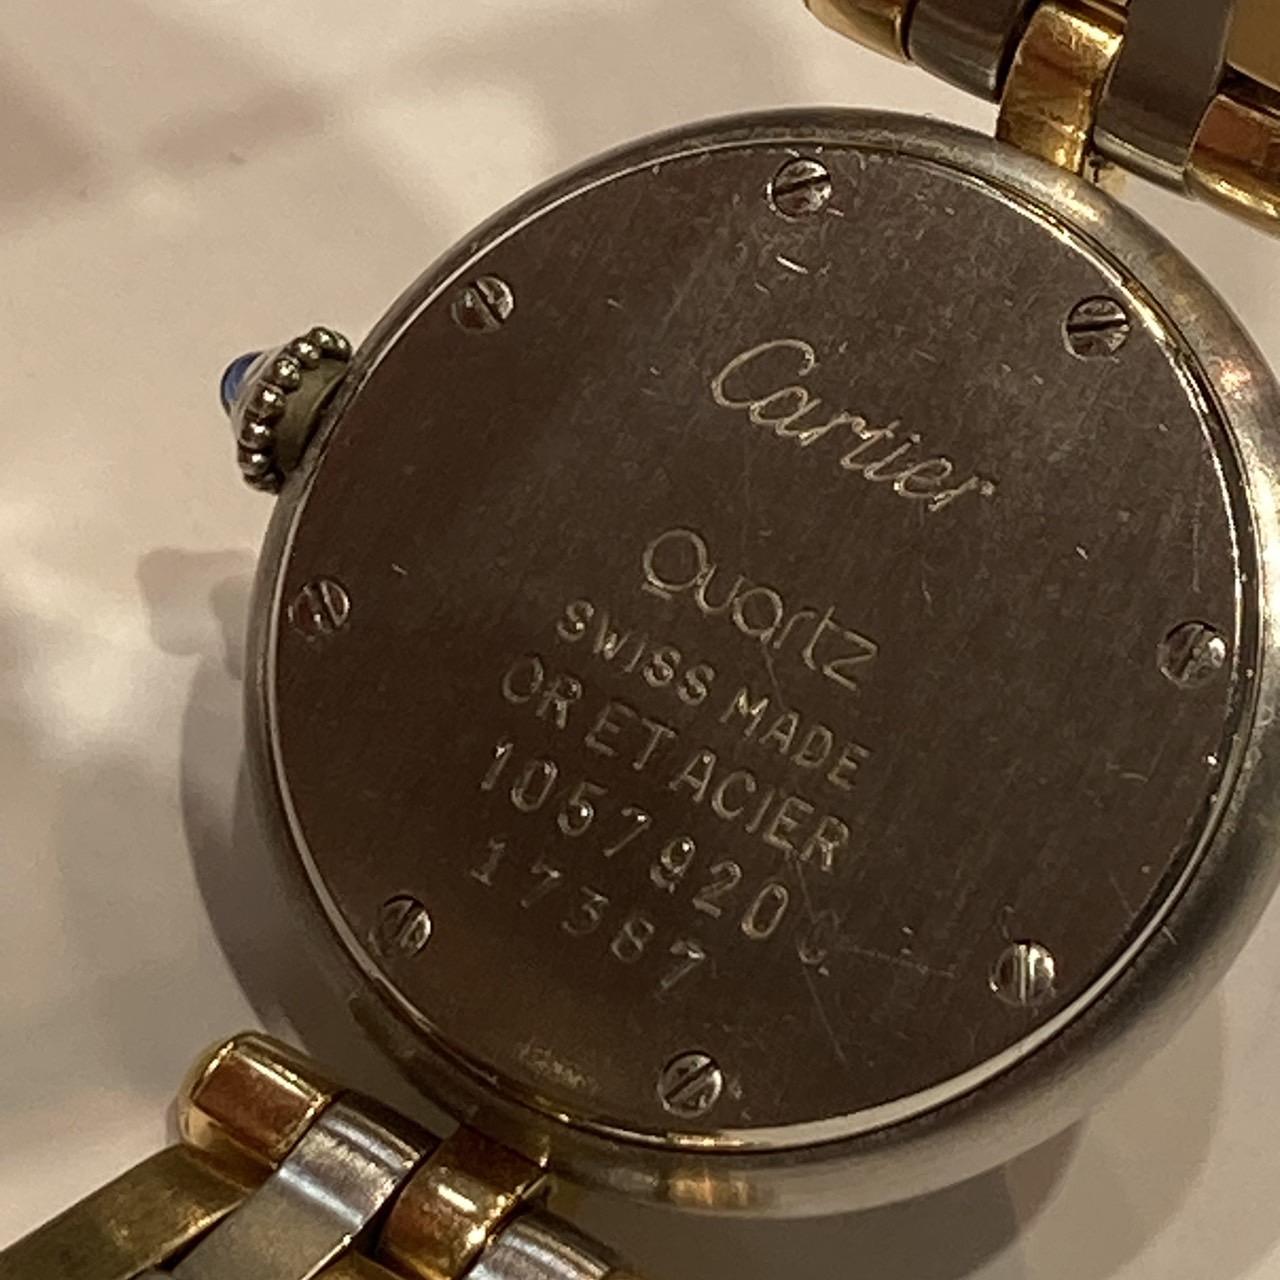 Cartier カルティエ パンテール ヴァンドーム SM 3ロウ 1057920 クオーツ腕時計